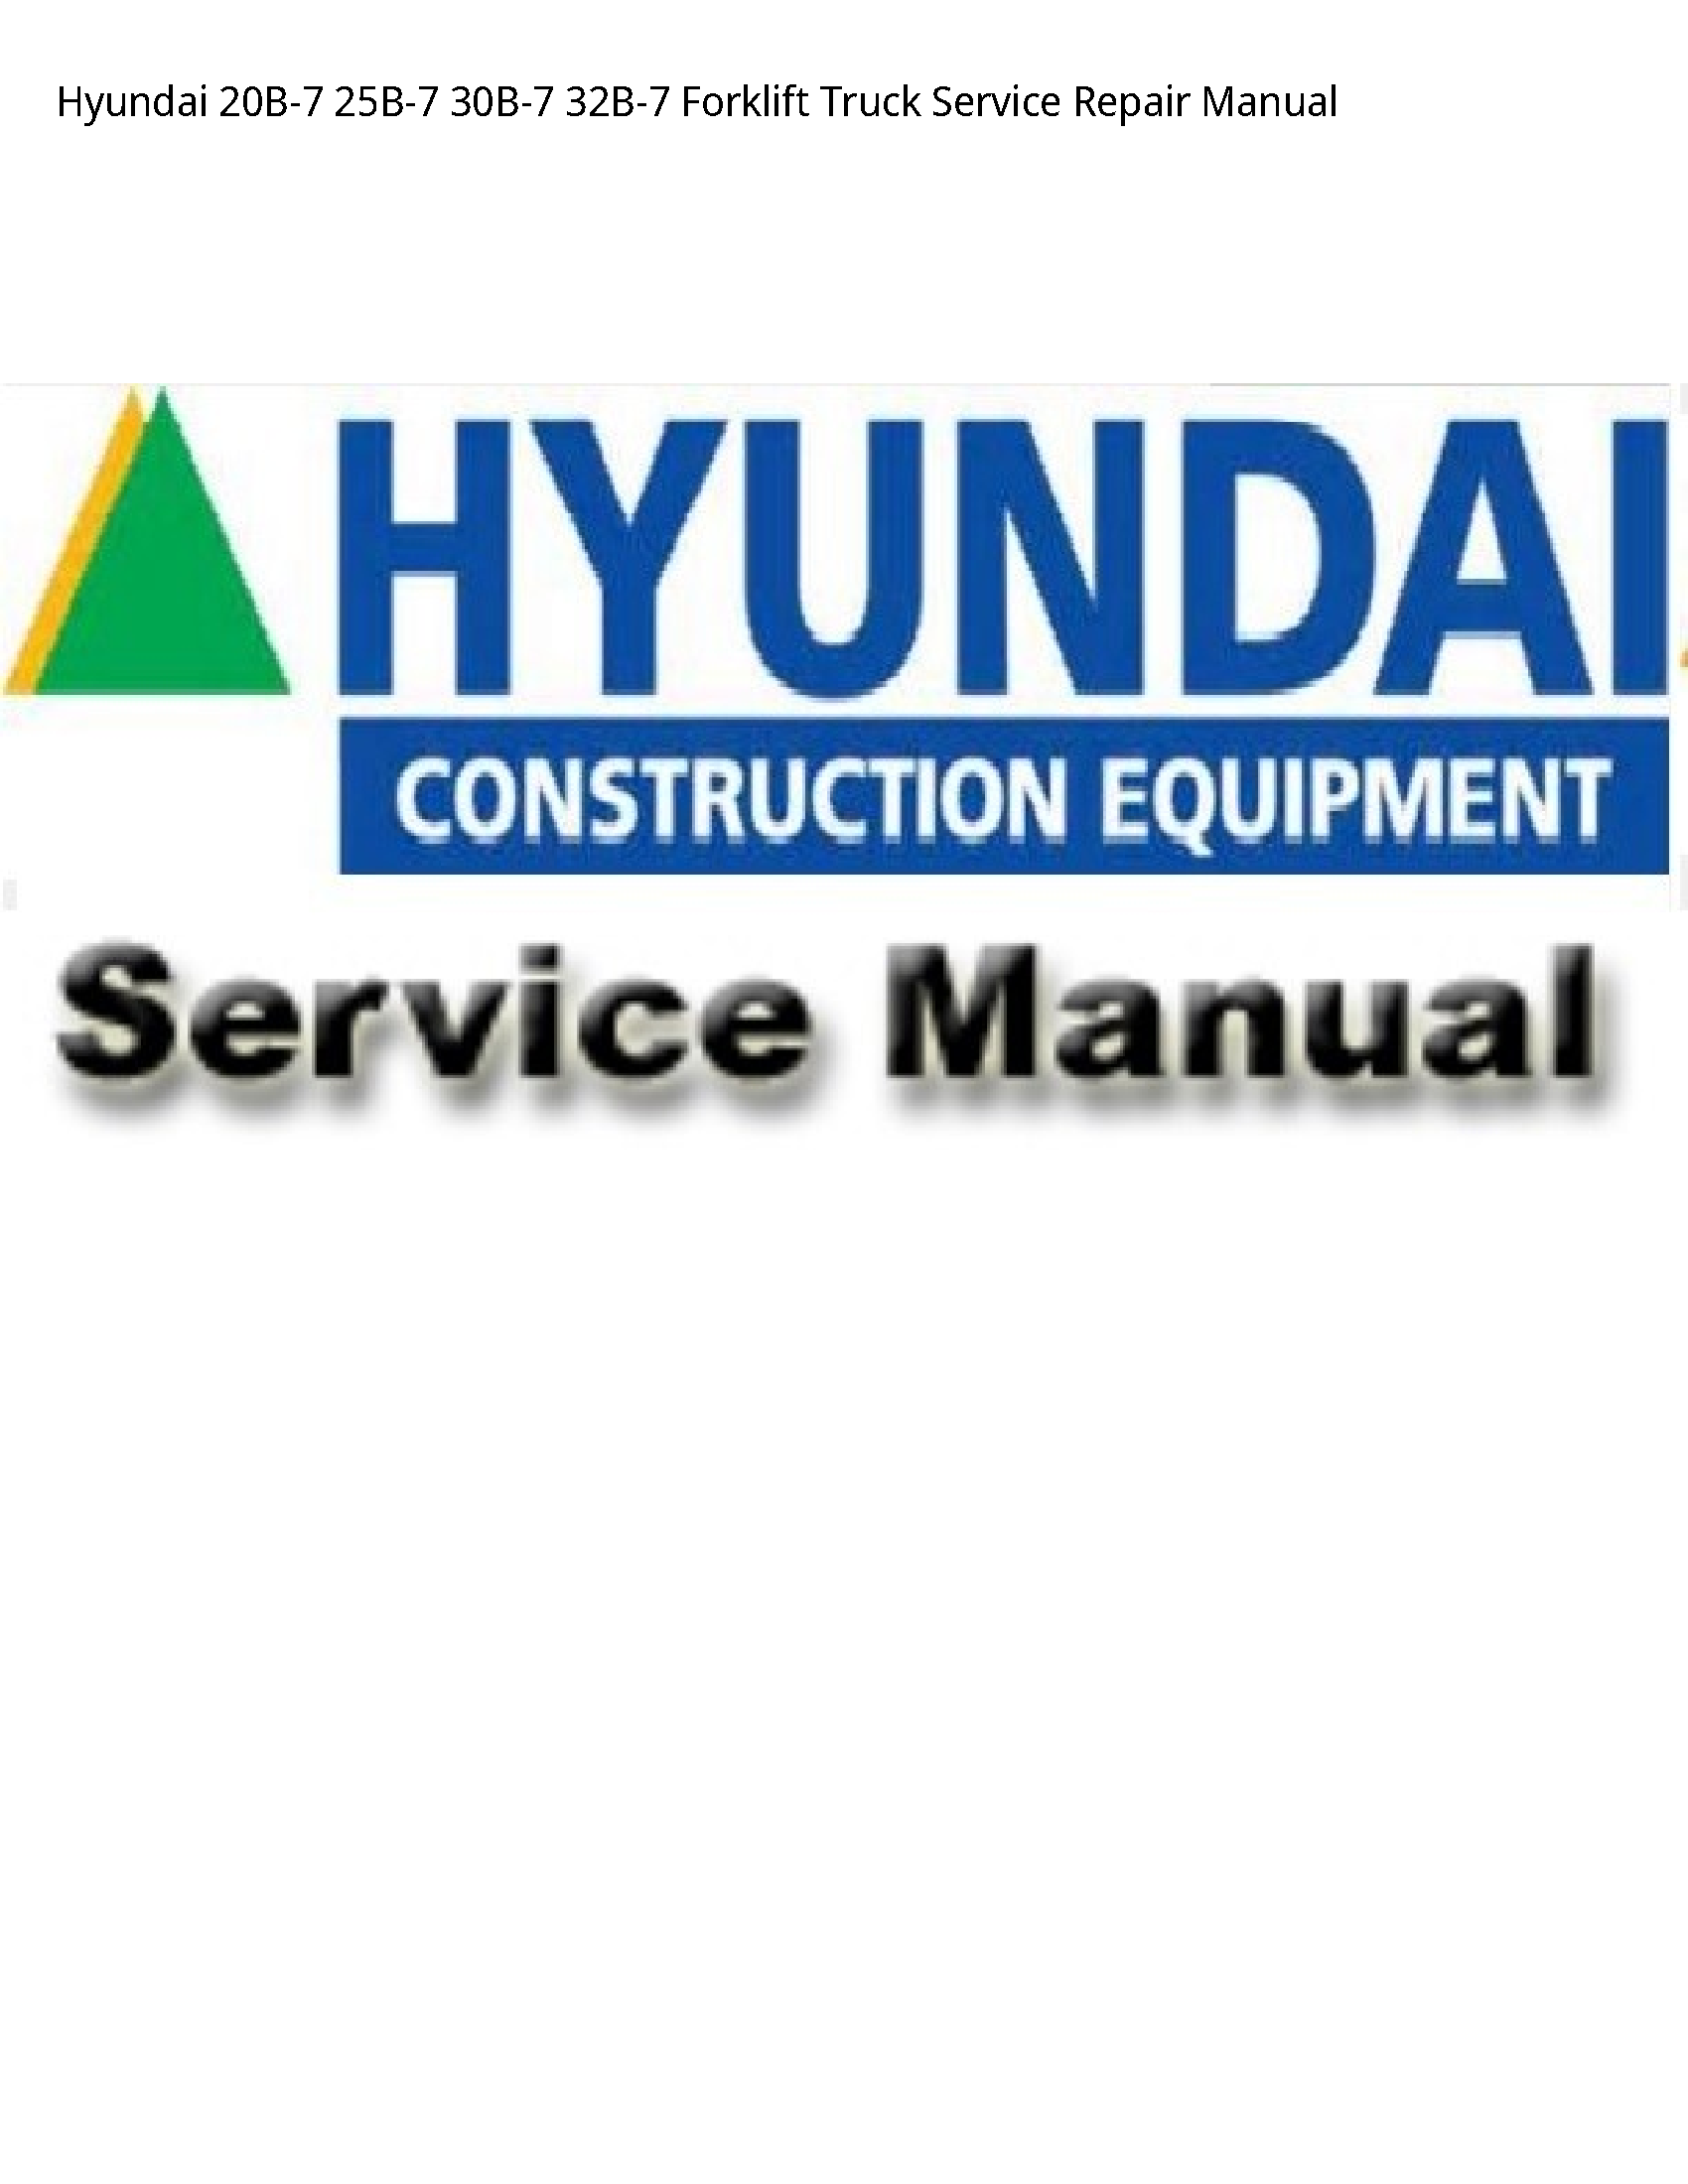 Hyundai 20B-7 Forklift Truck manual